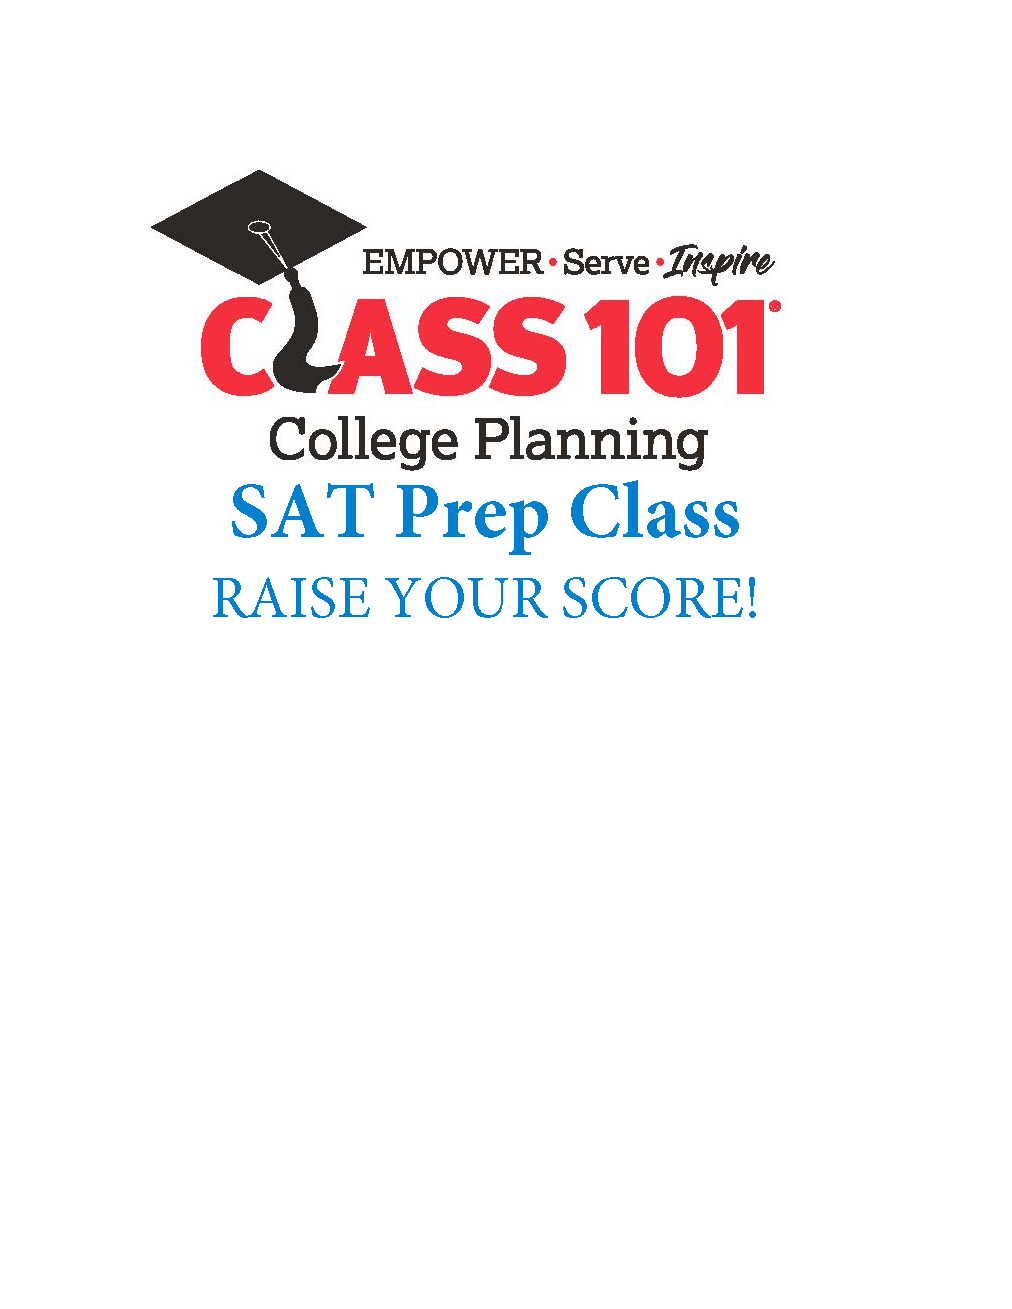 RAISE Your SAT Score! FREE SAT Consultation! SAT PREP CLASS - CALL TO REGISTER (805) 380-3302